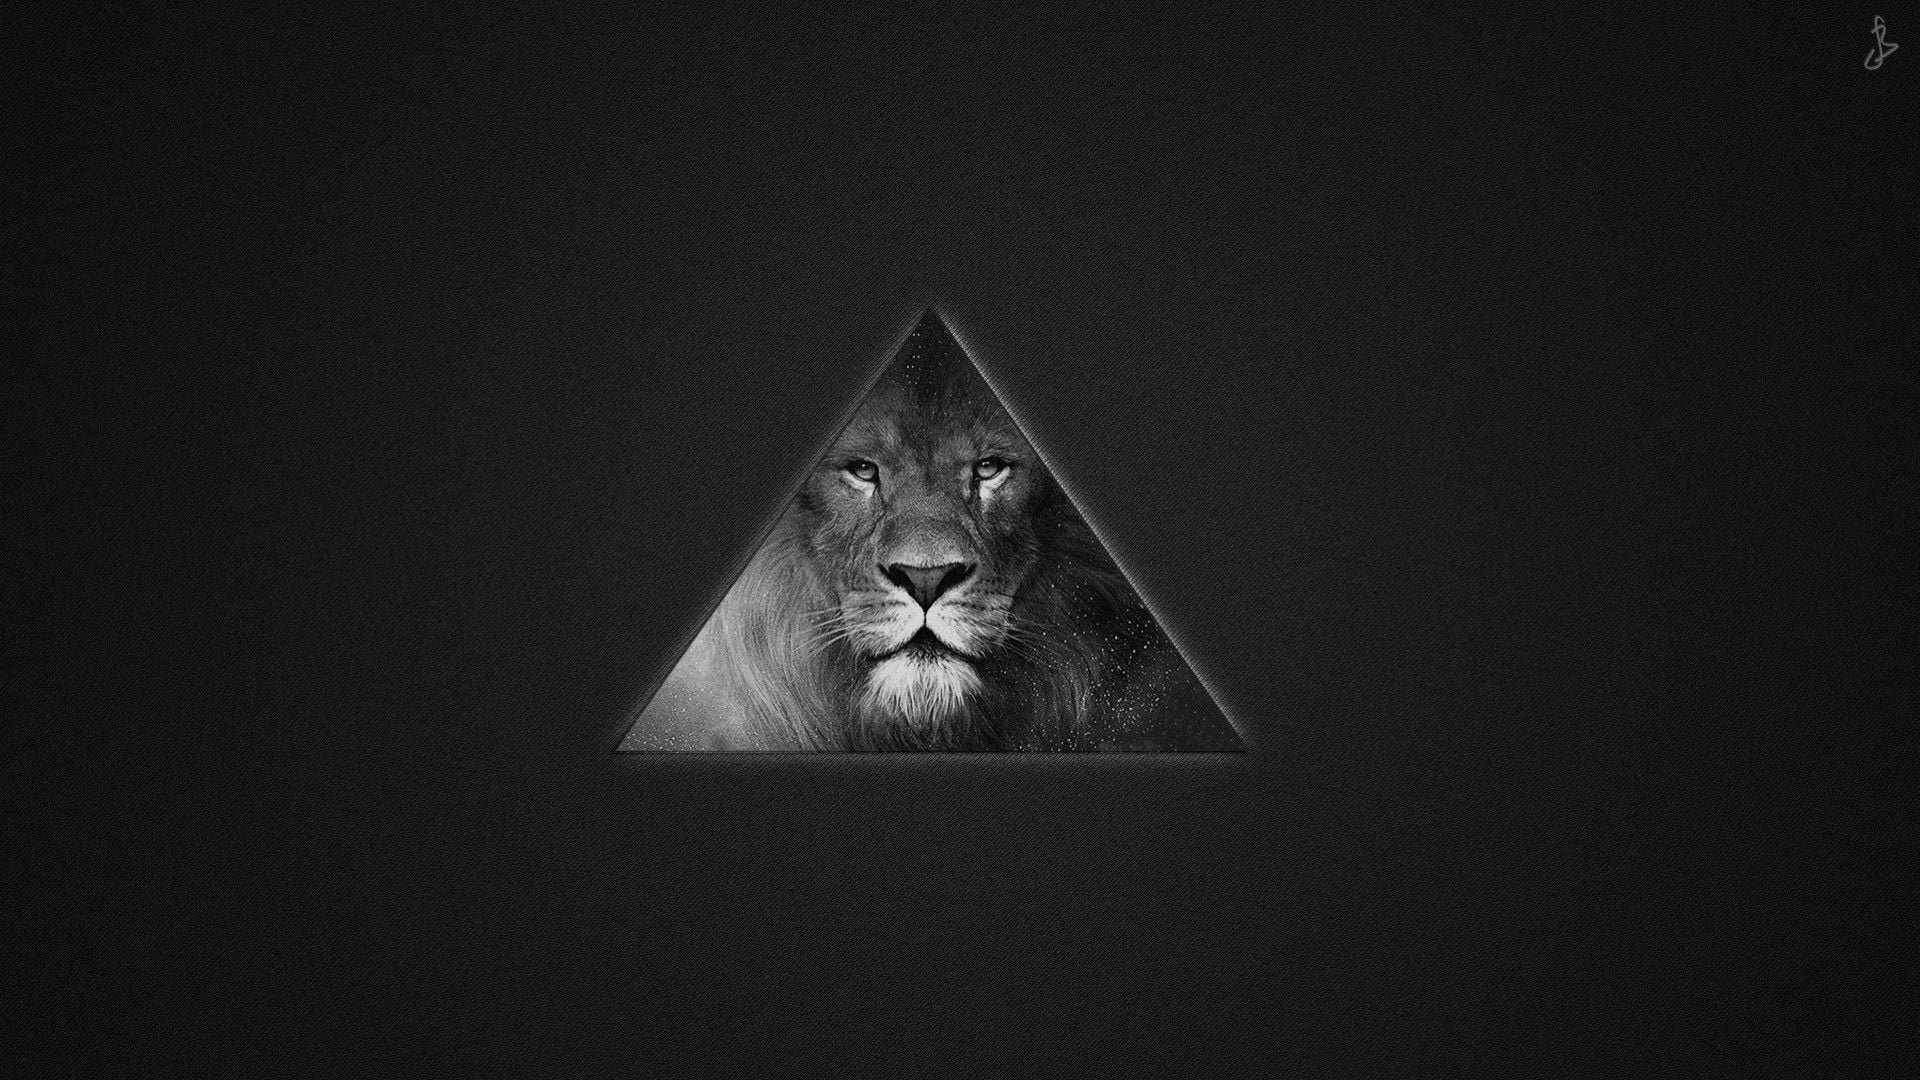 Lion Black And White Animal wallpaper download